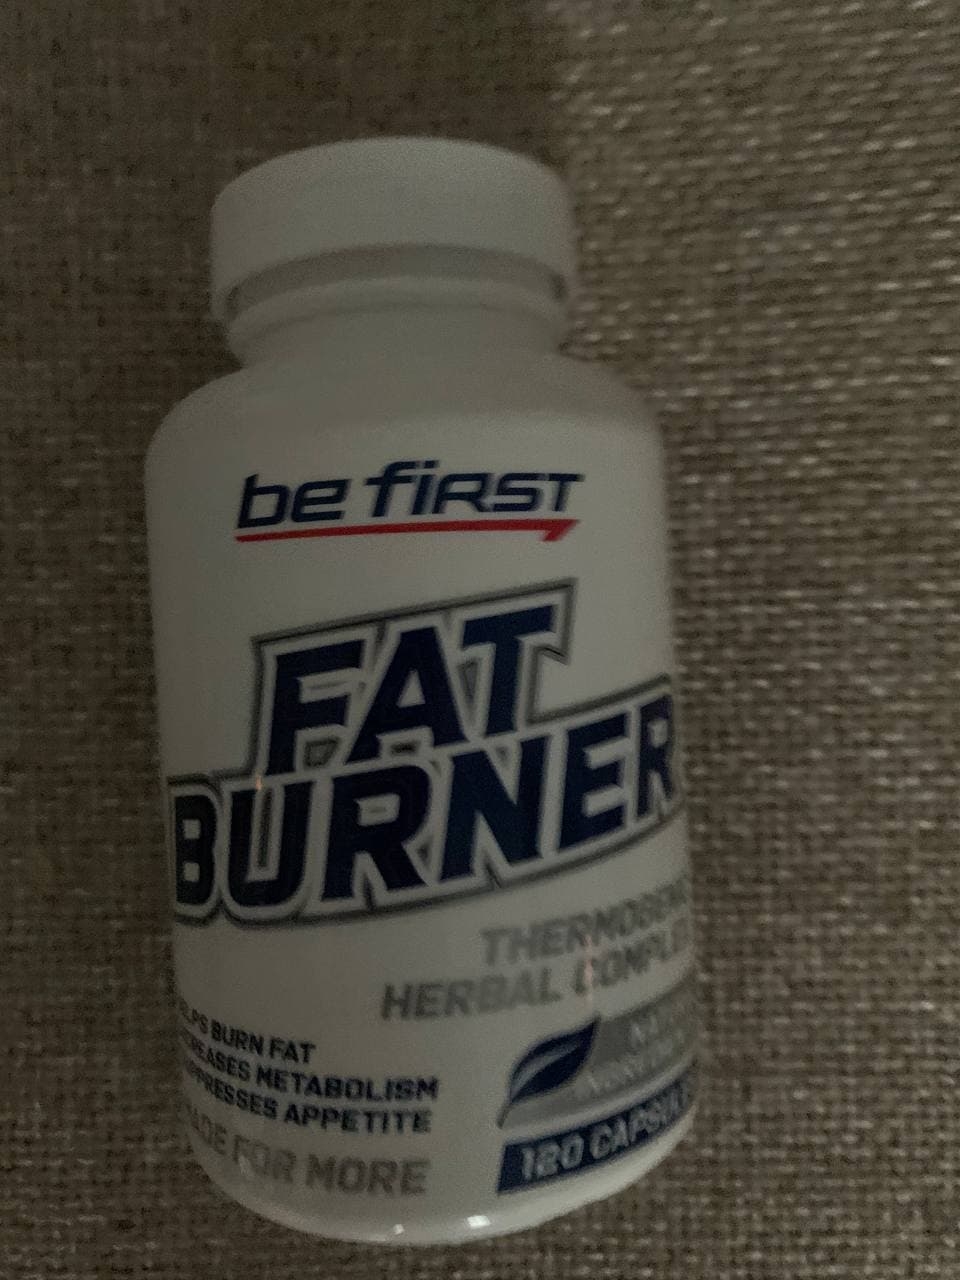 Be First Fat burner 120 капс - Есть эффект